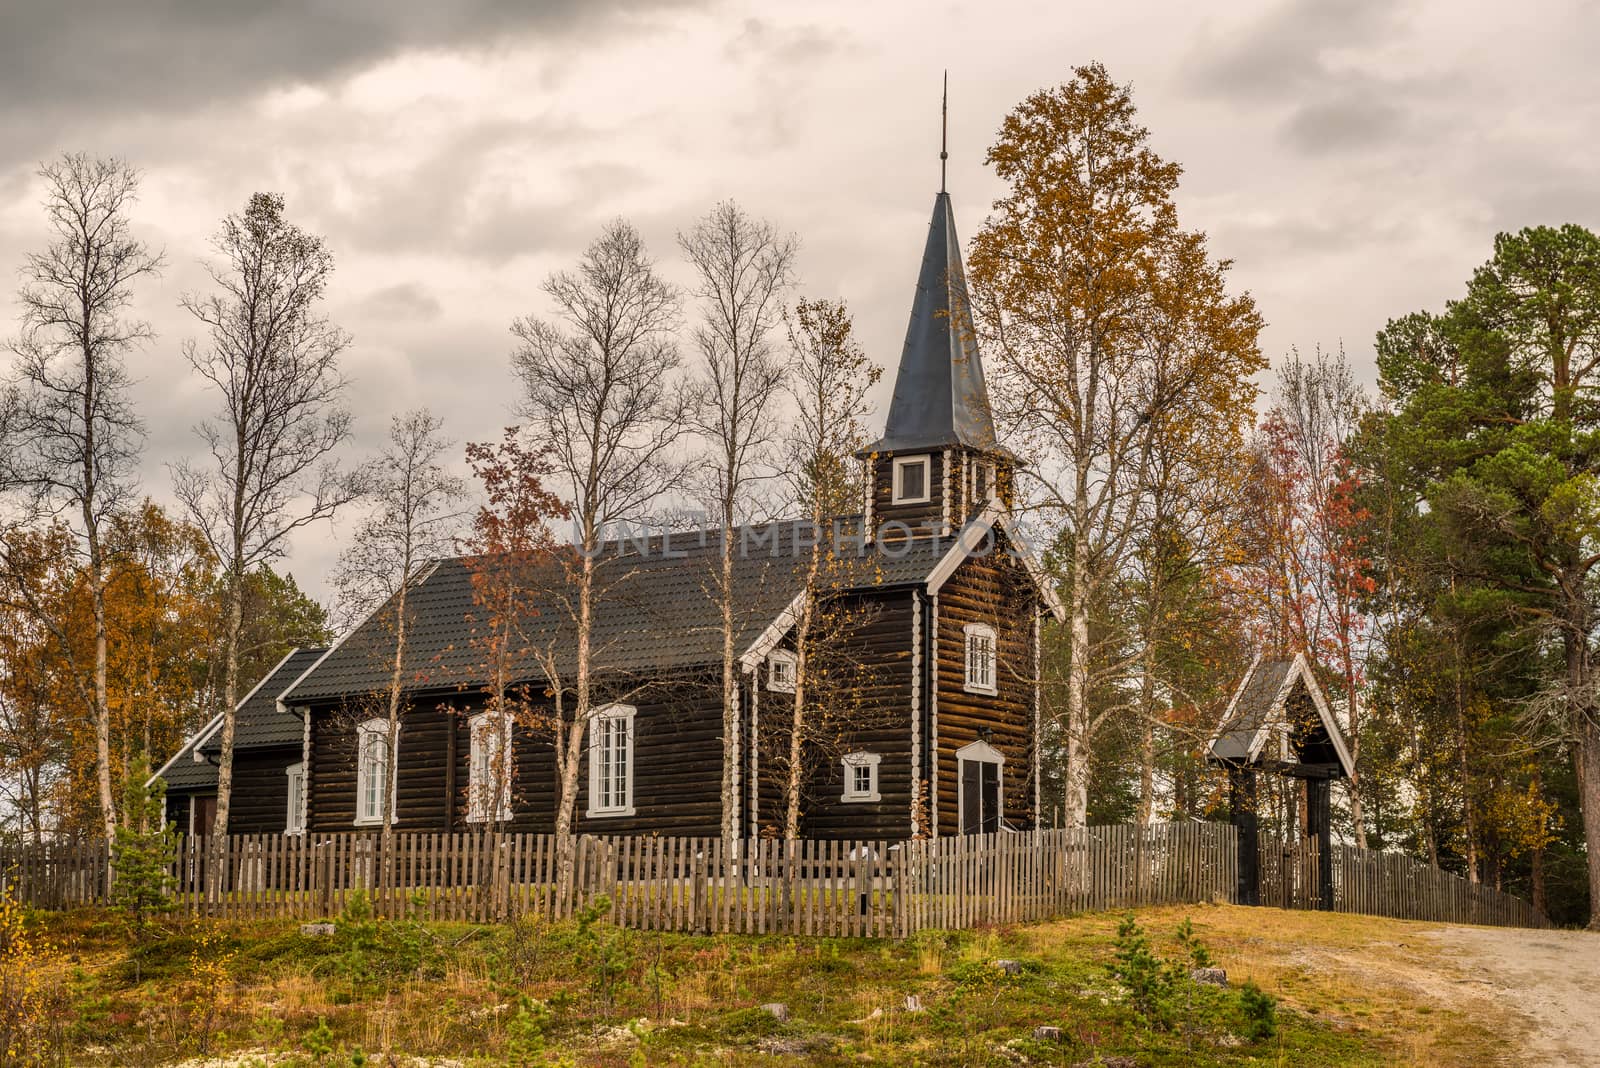 Historic church in Somadal, Hedmark, Norway by nickfox